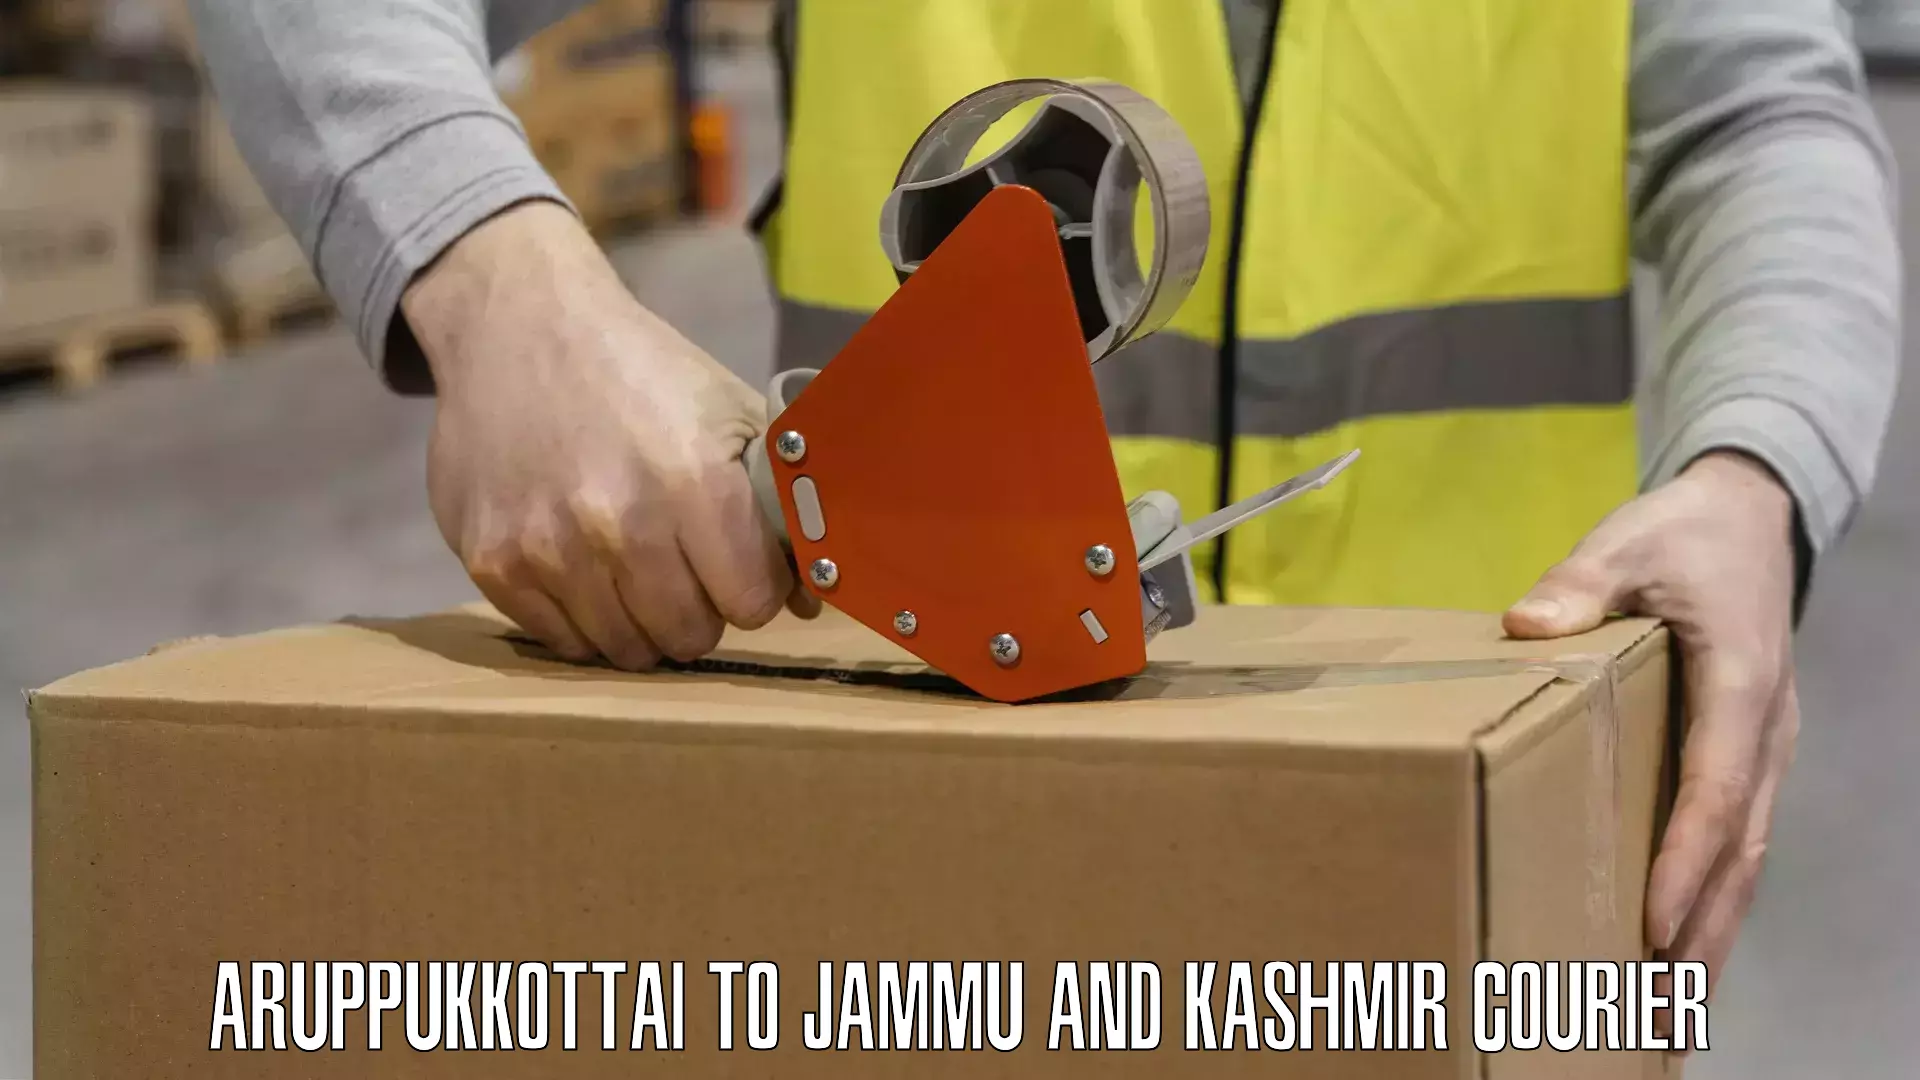 Full-service courier options Aruppukkottai to Jammu